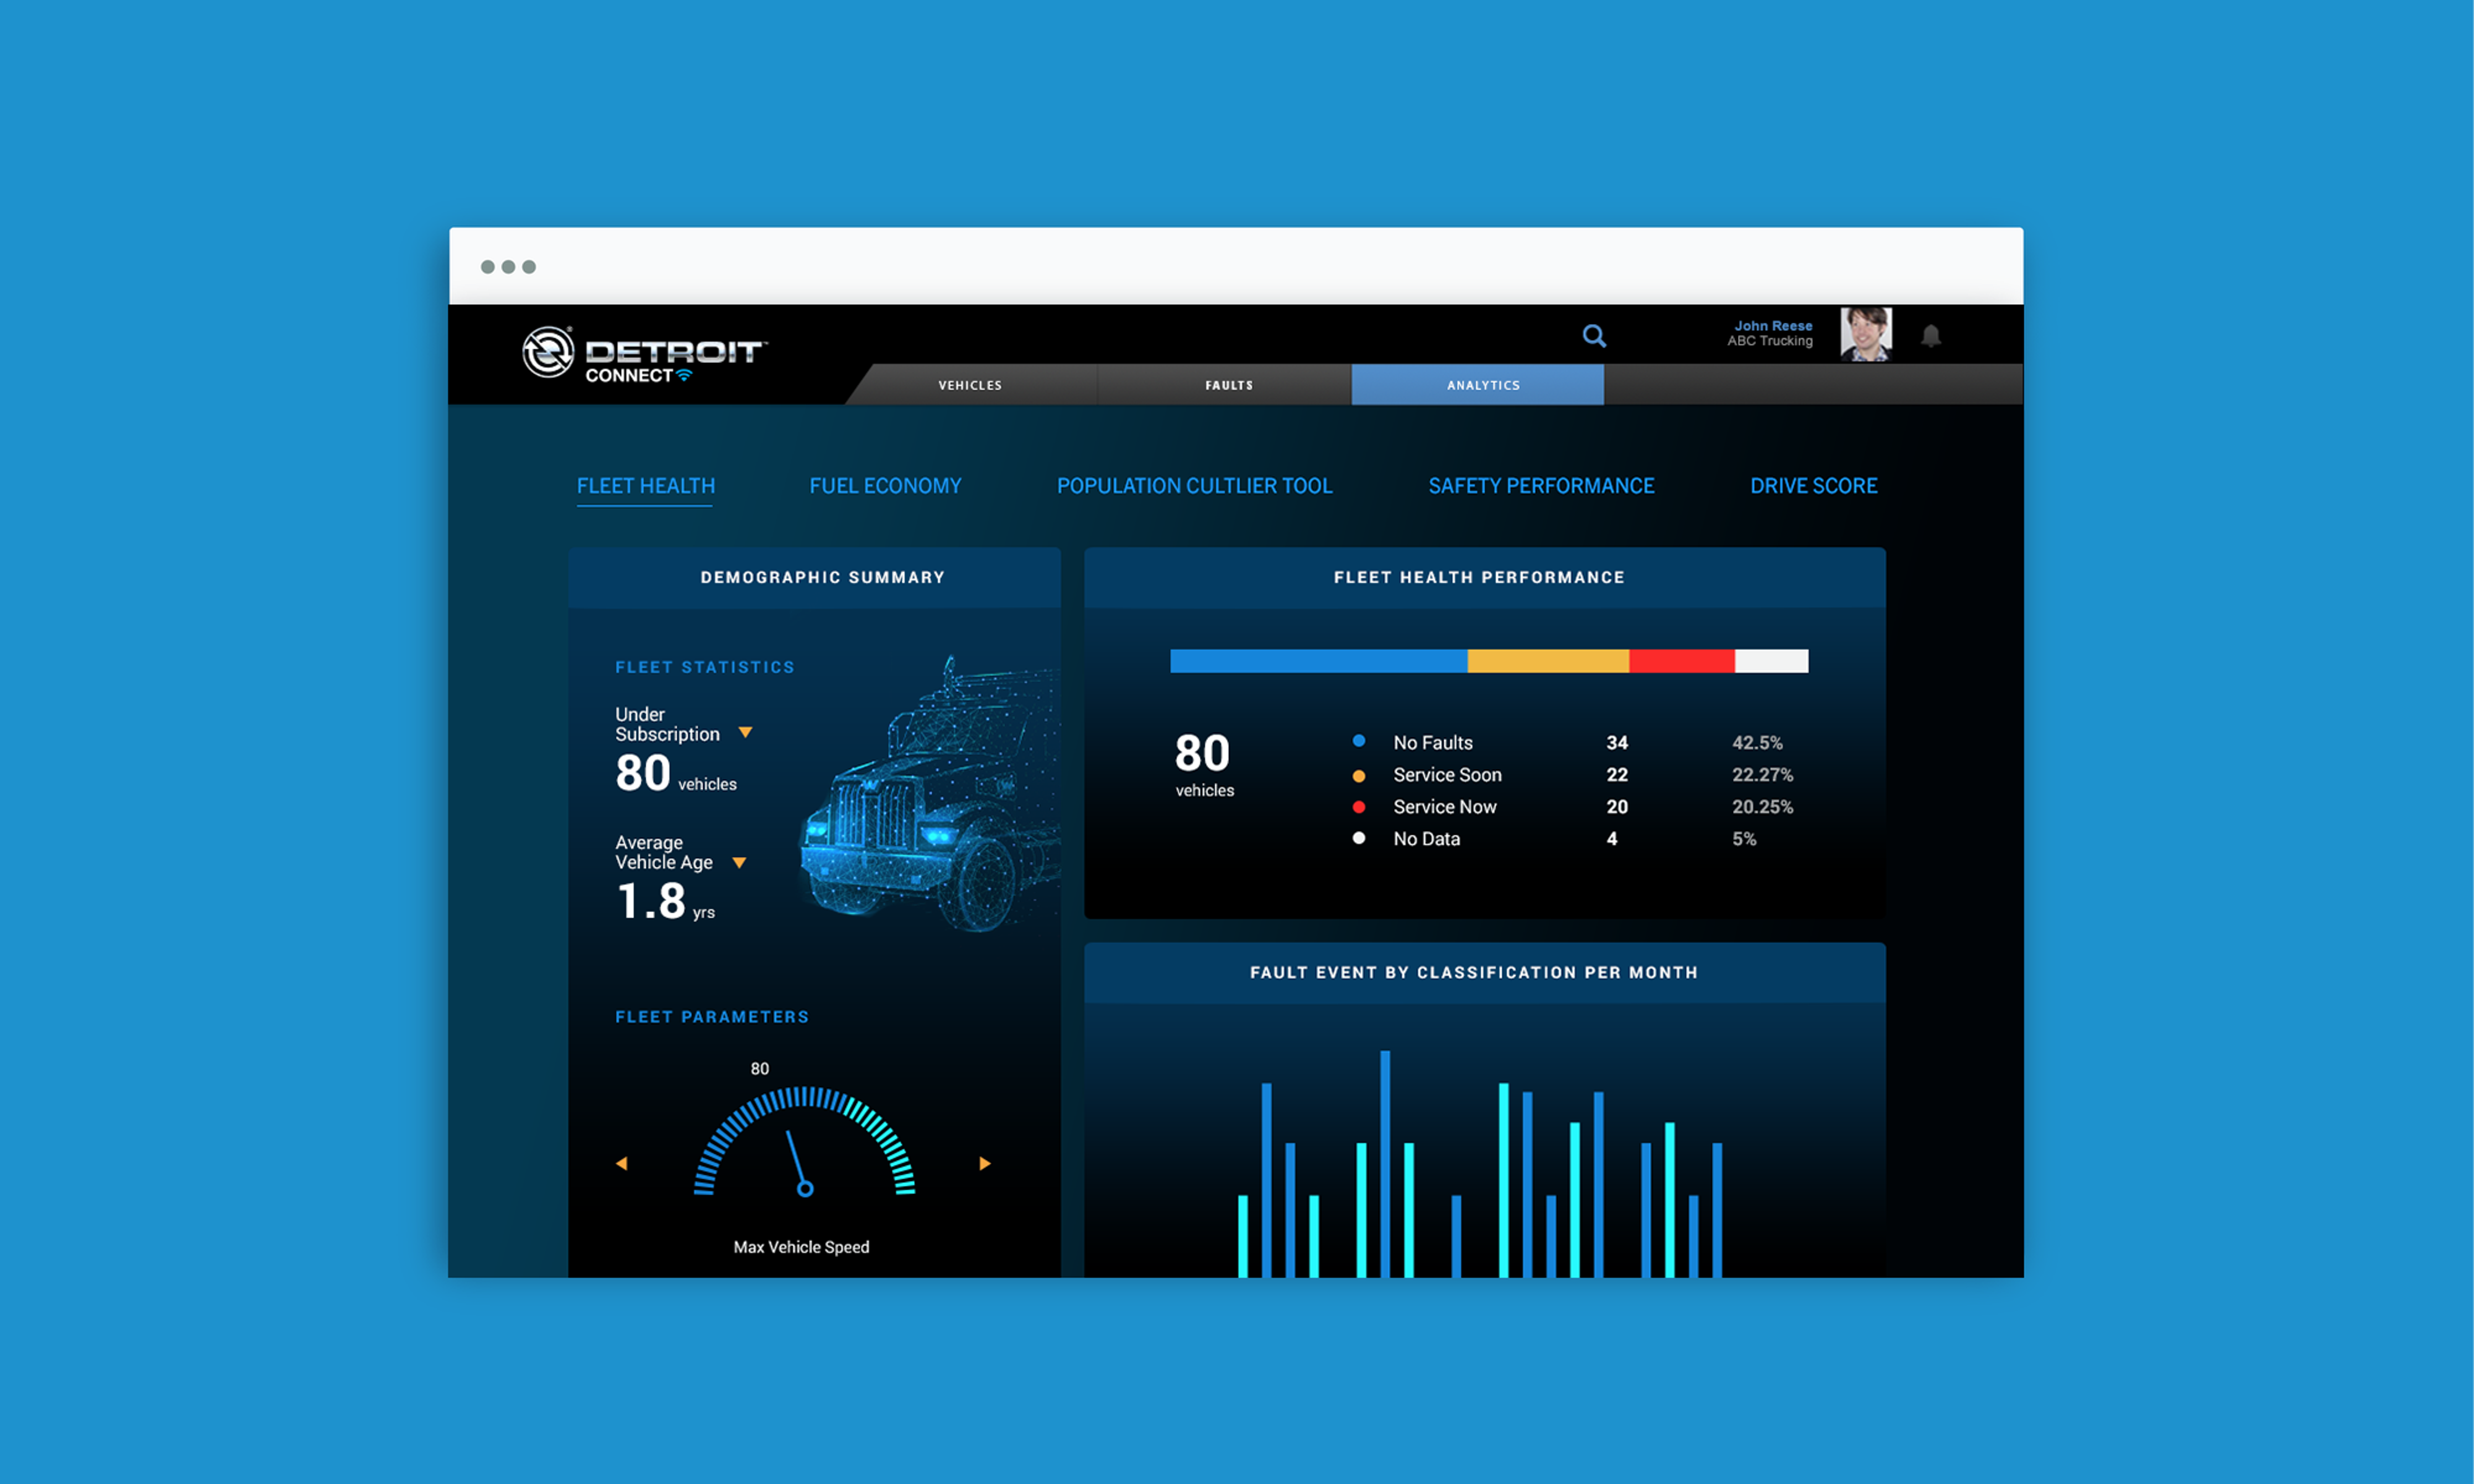 The Detroit Connect web app, showing data visualizations regarding fleet health